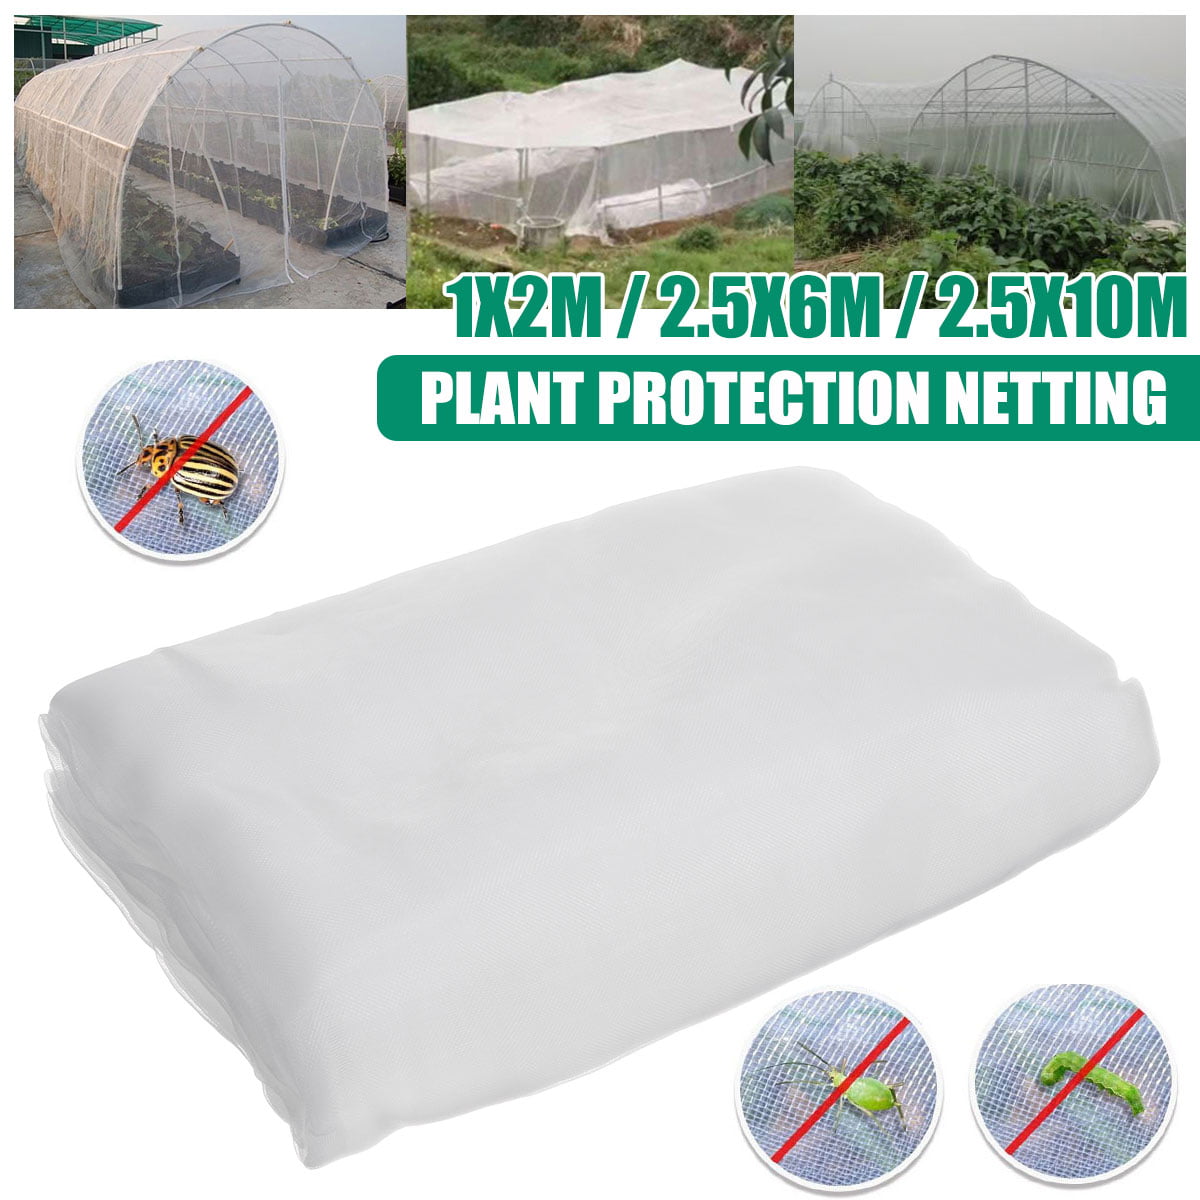 1x2m Insect Screen & Garden Netting against Bugs Birds & Squirrels Mesh Net 